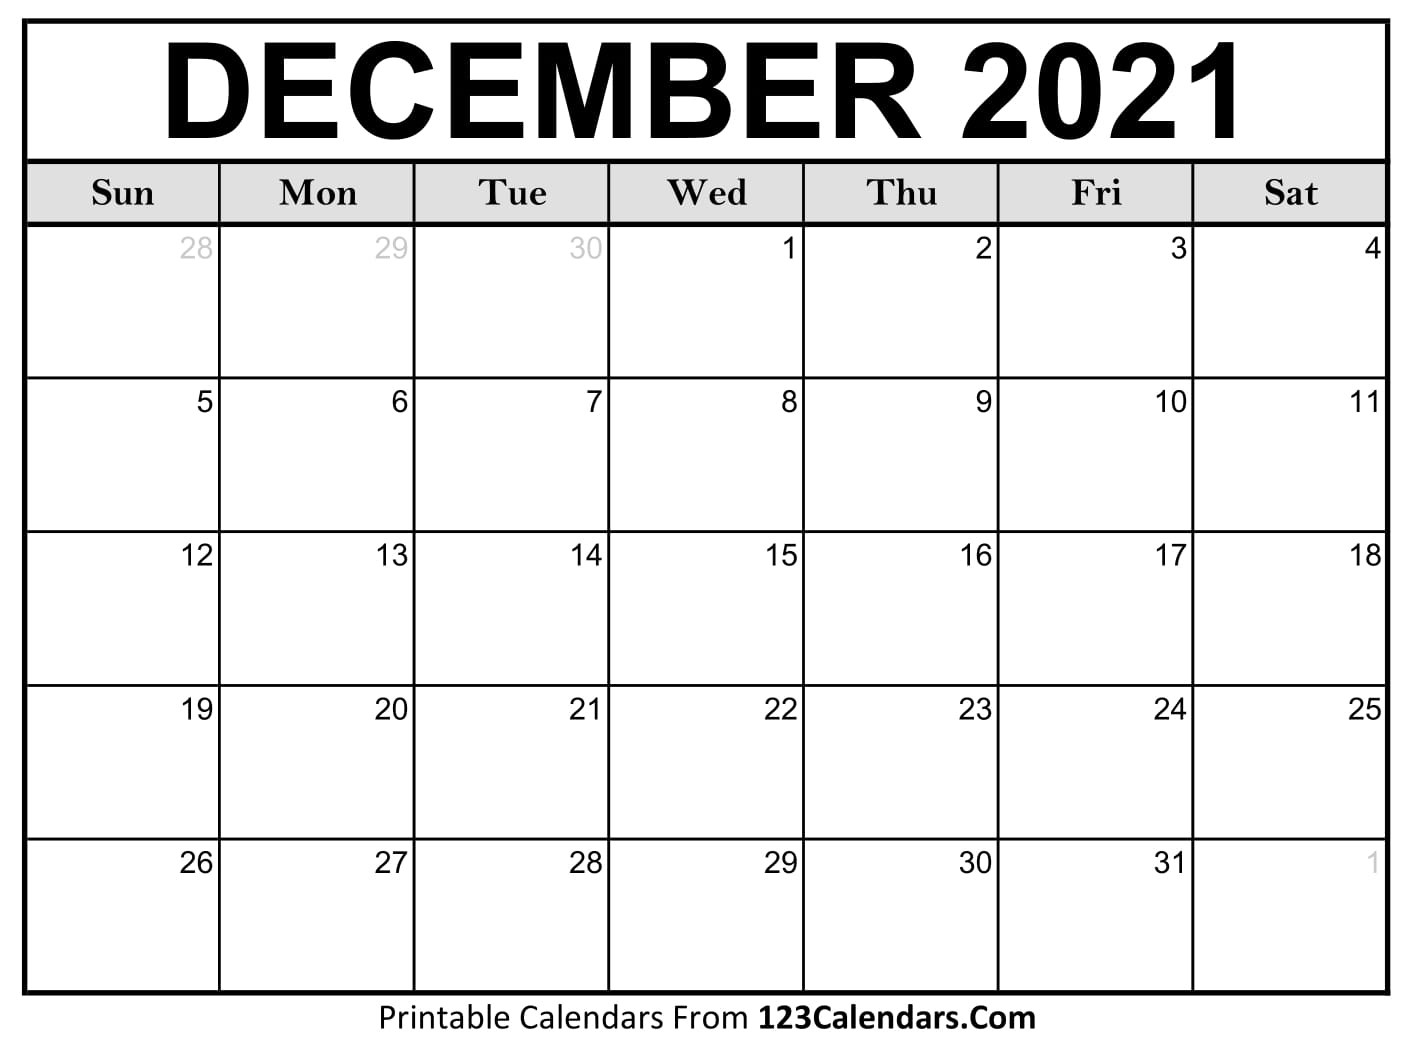 Printable December 2021 Calendar Templates - 123Calendars